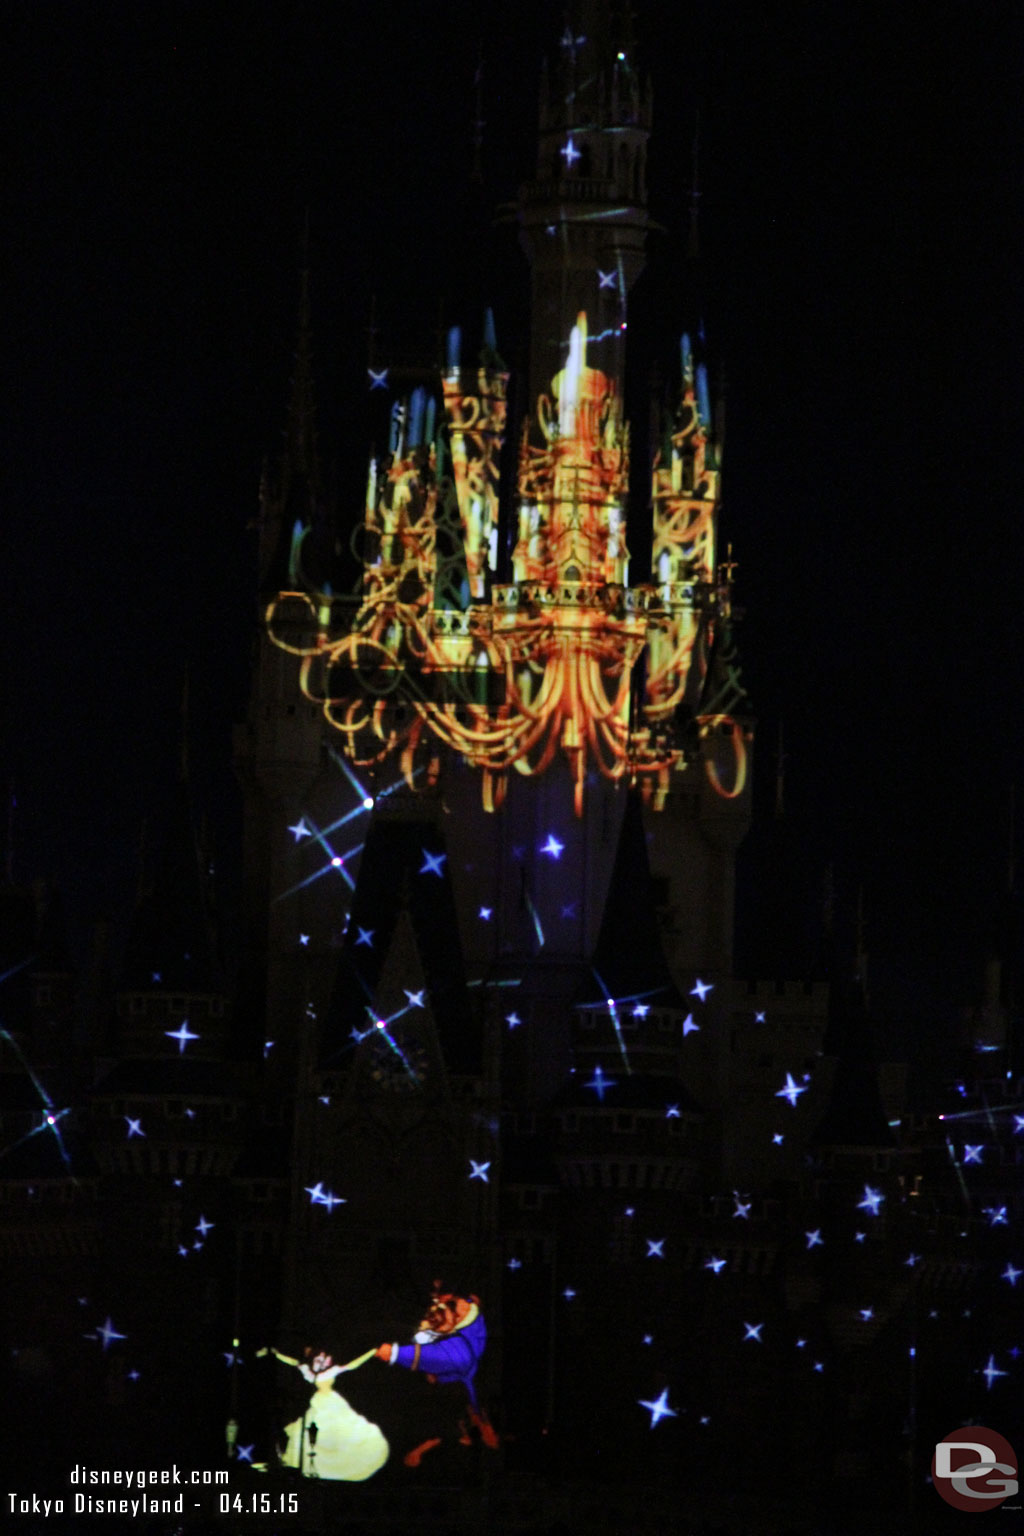 Tokyo Disneyland - Once Upon a Time